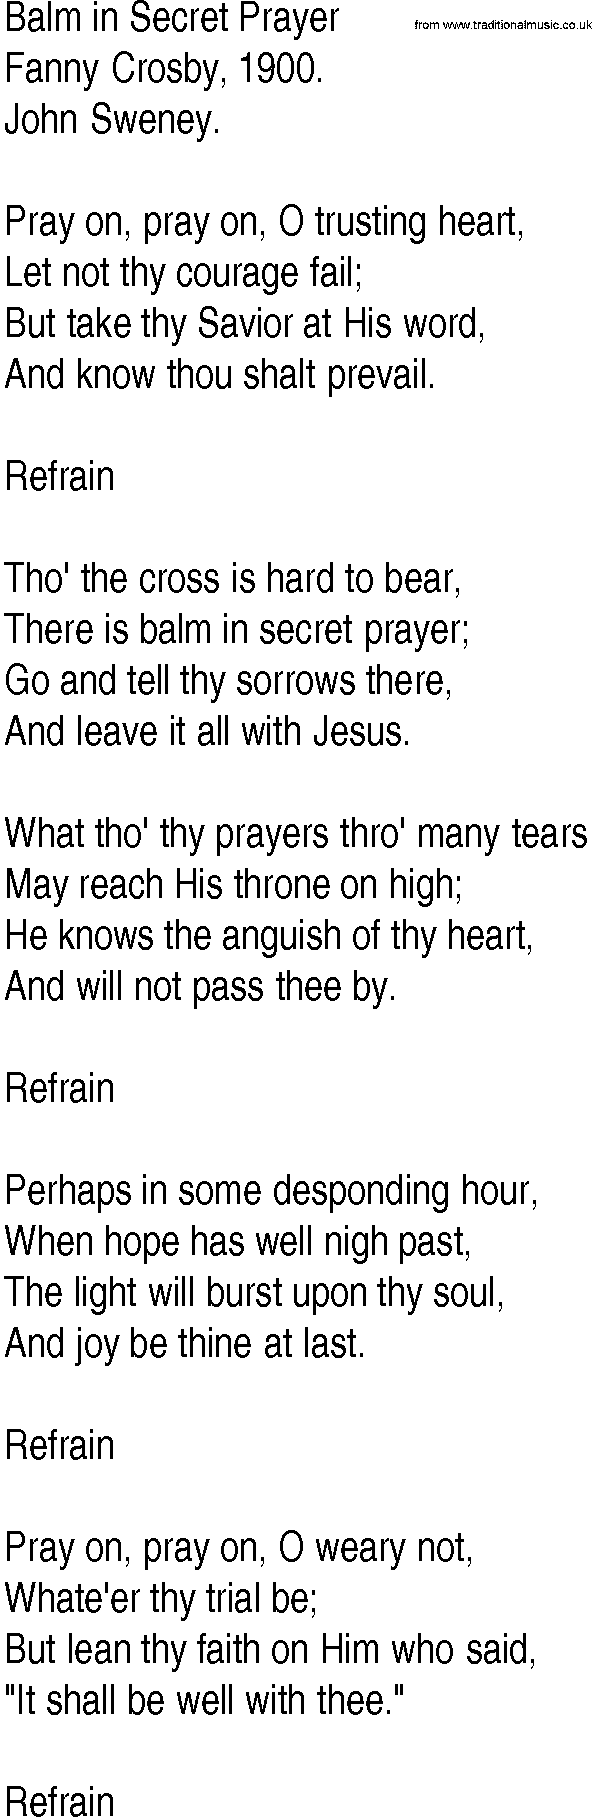 Hymn and Gospel Song: Balm in Secret Prayer by Fanny Crosby lyrics